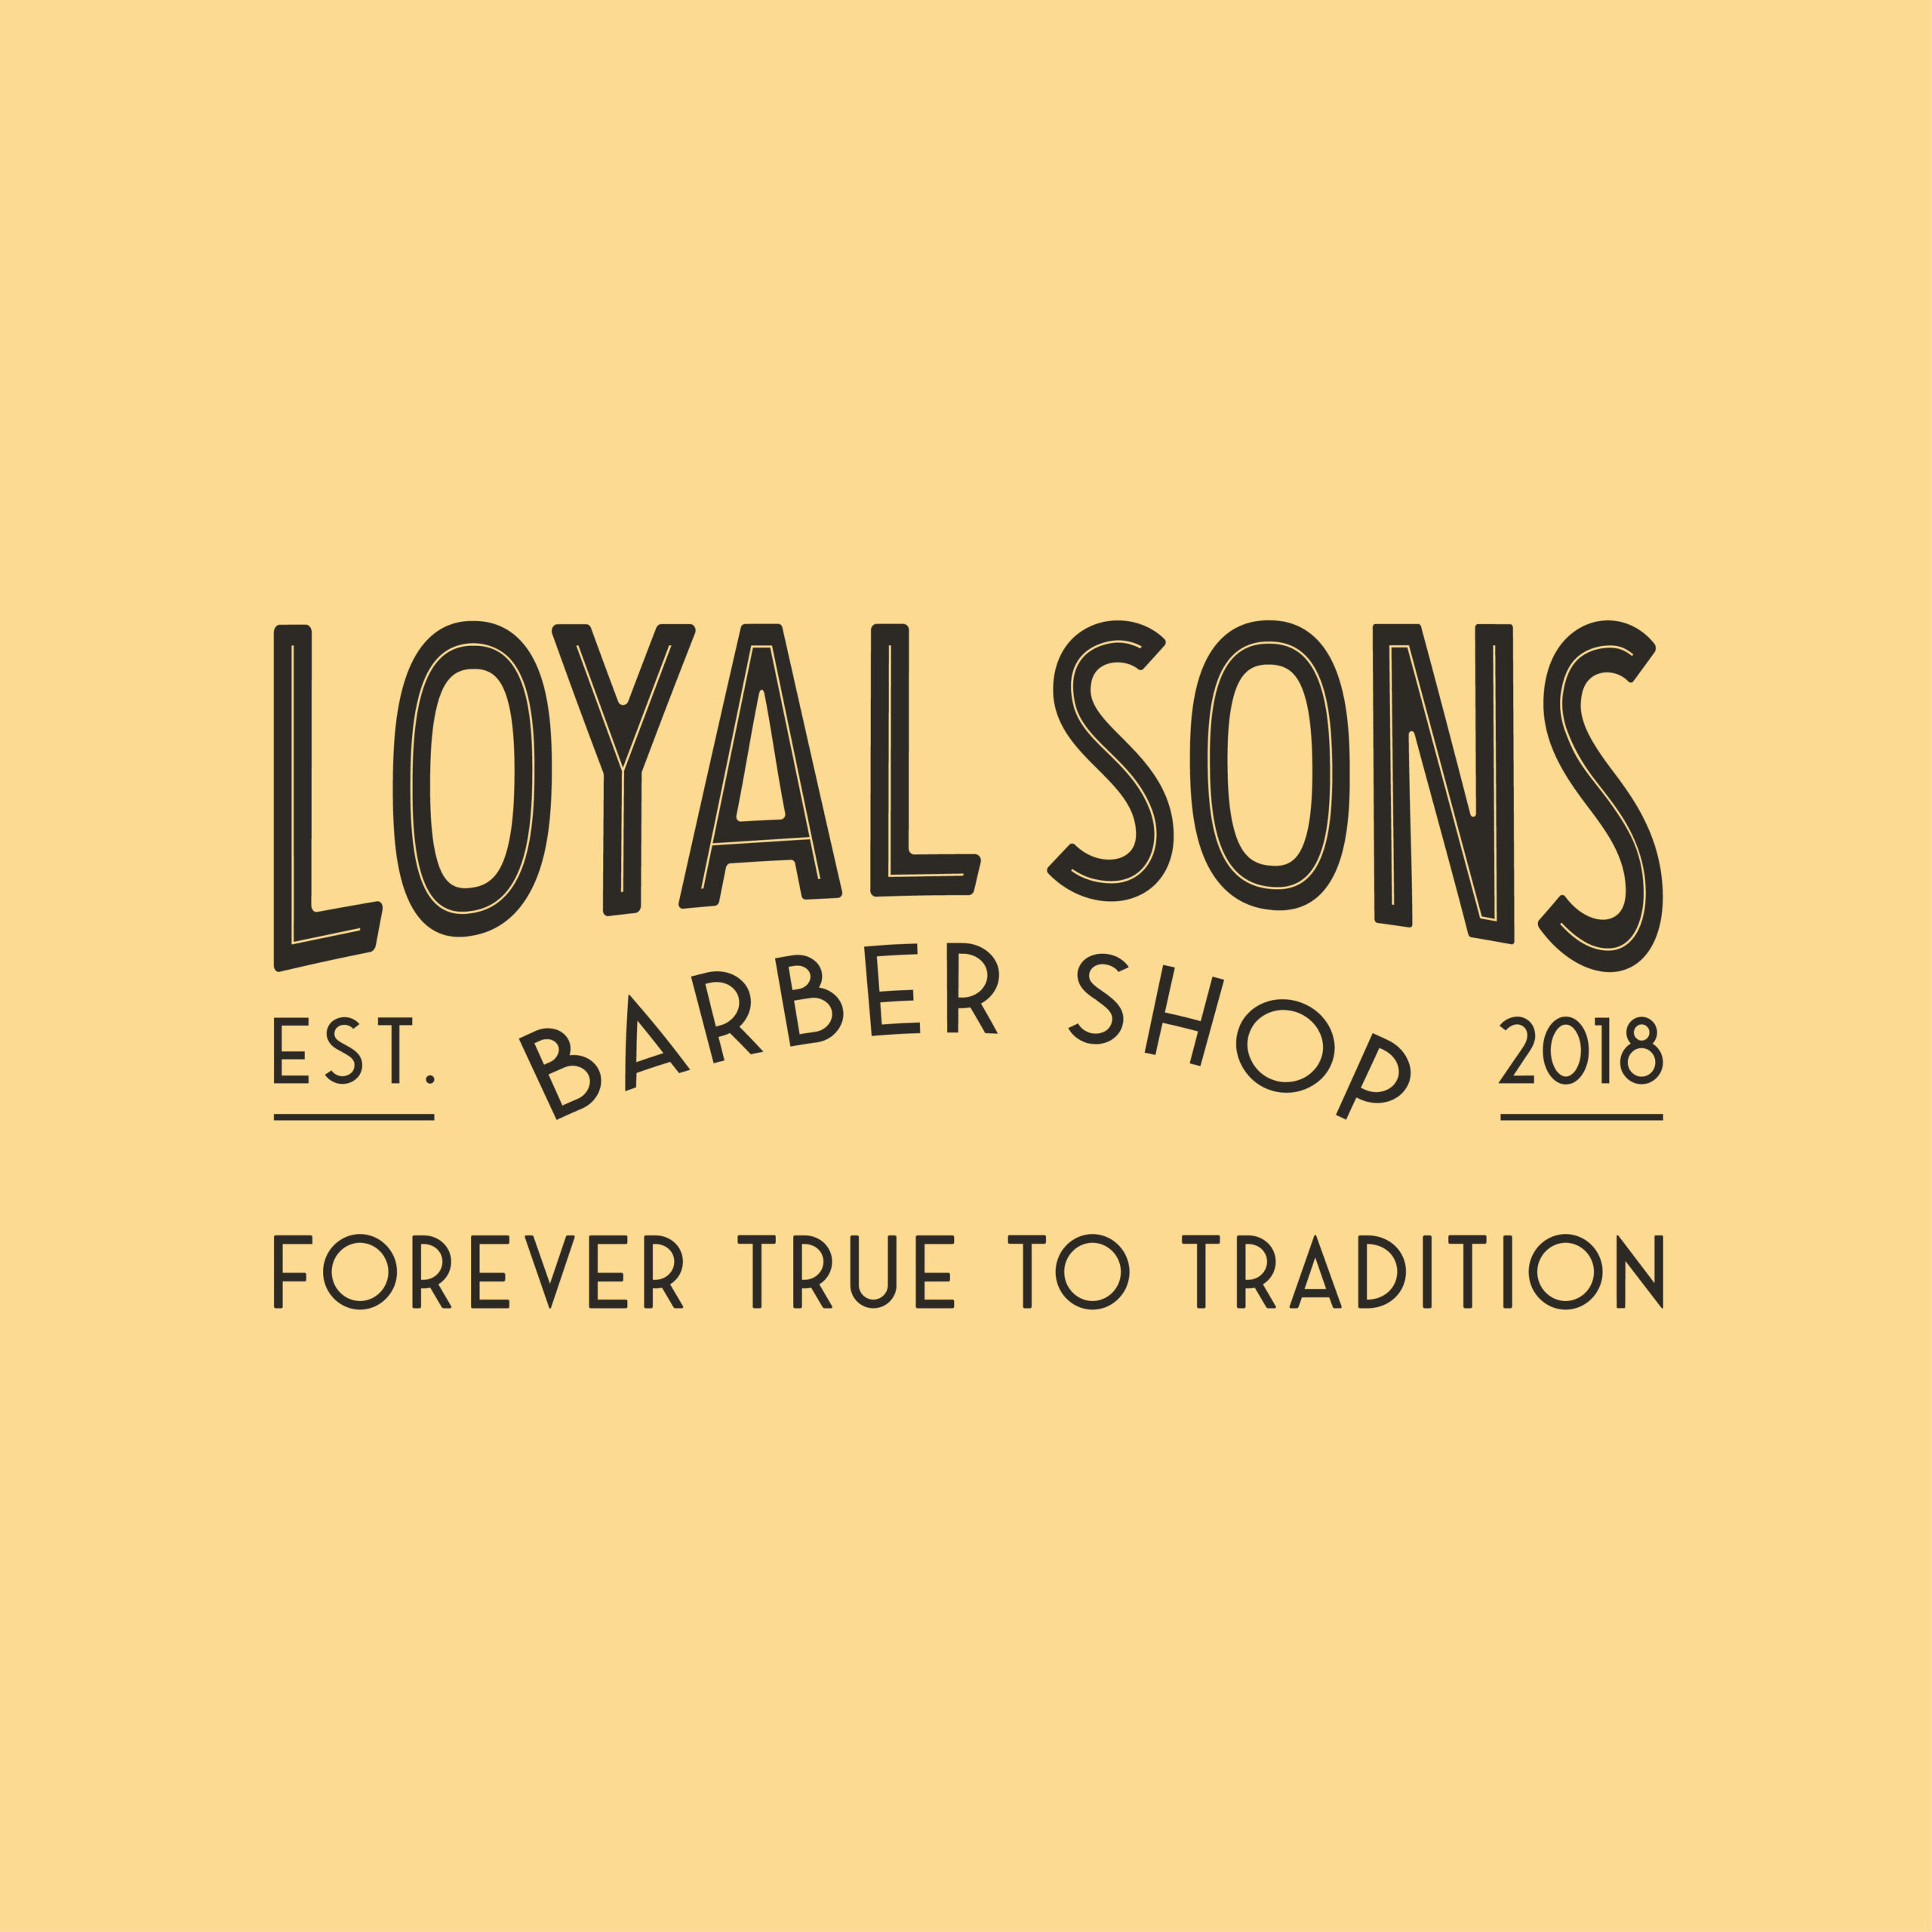 Loyal Sons Shop Shirt